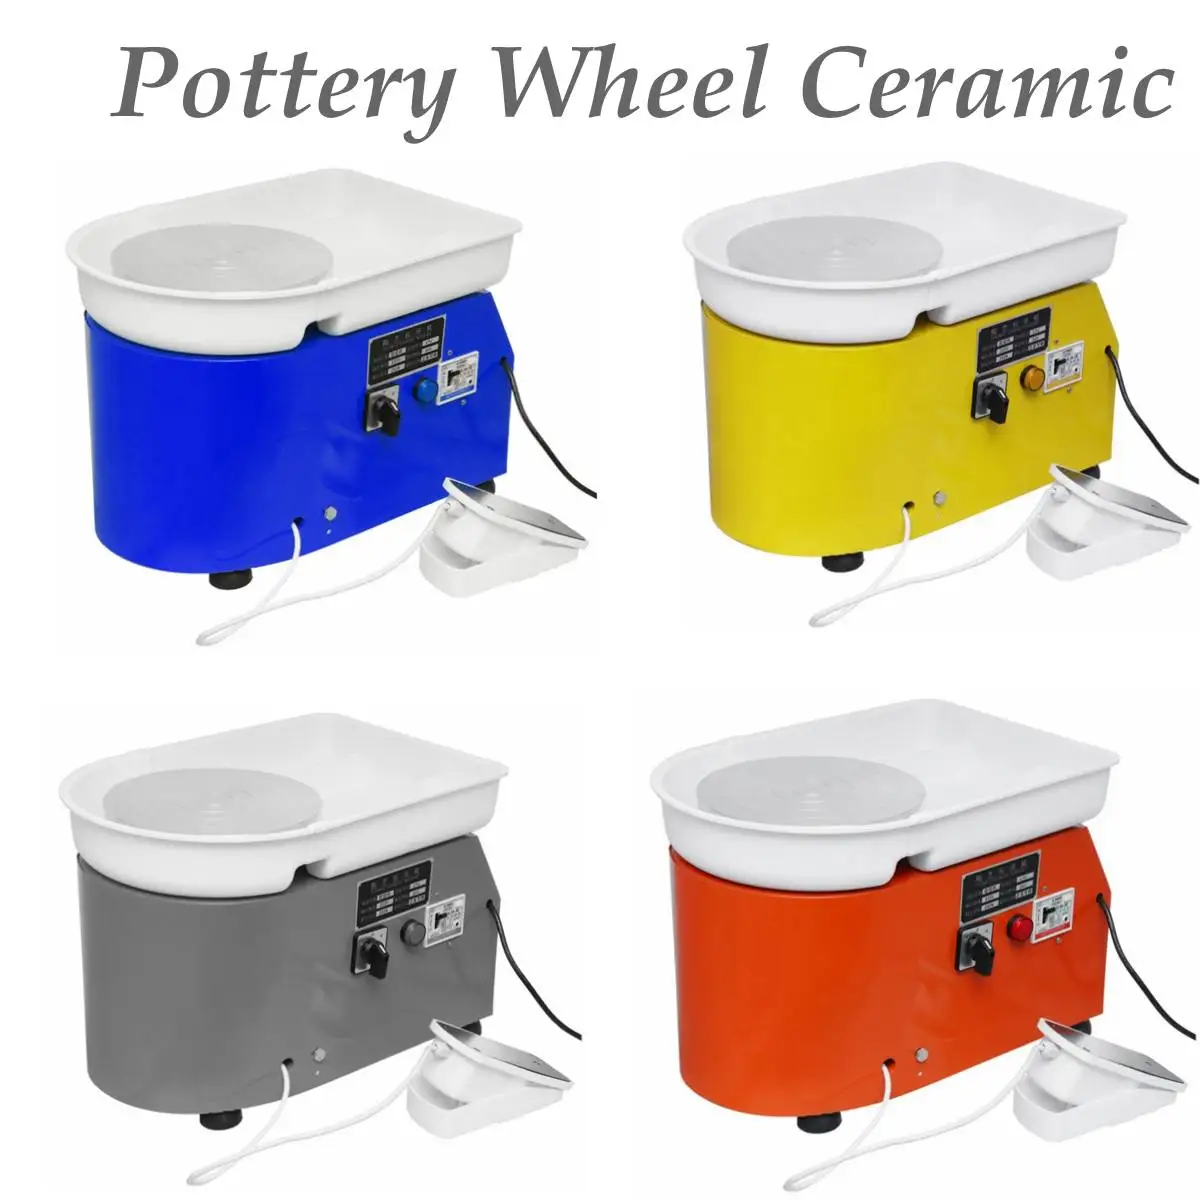 

Turntable 250W/350W Electric Tours Wheel Pottery Machine Ceramic Clay Potter Art For Ceramic Work Ceramics 110V/220V